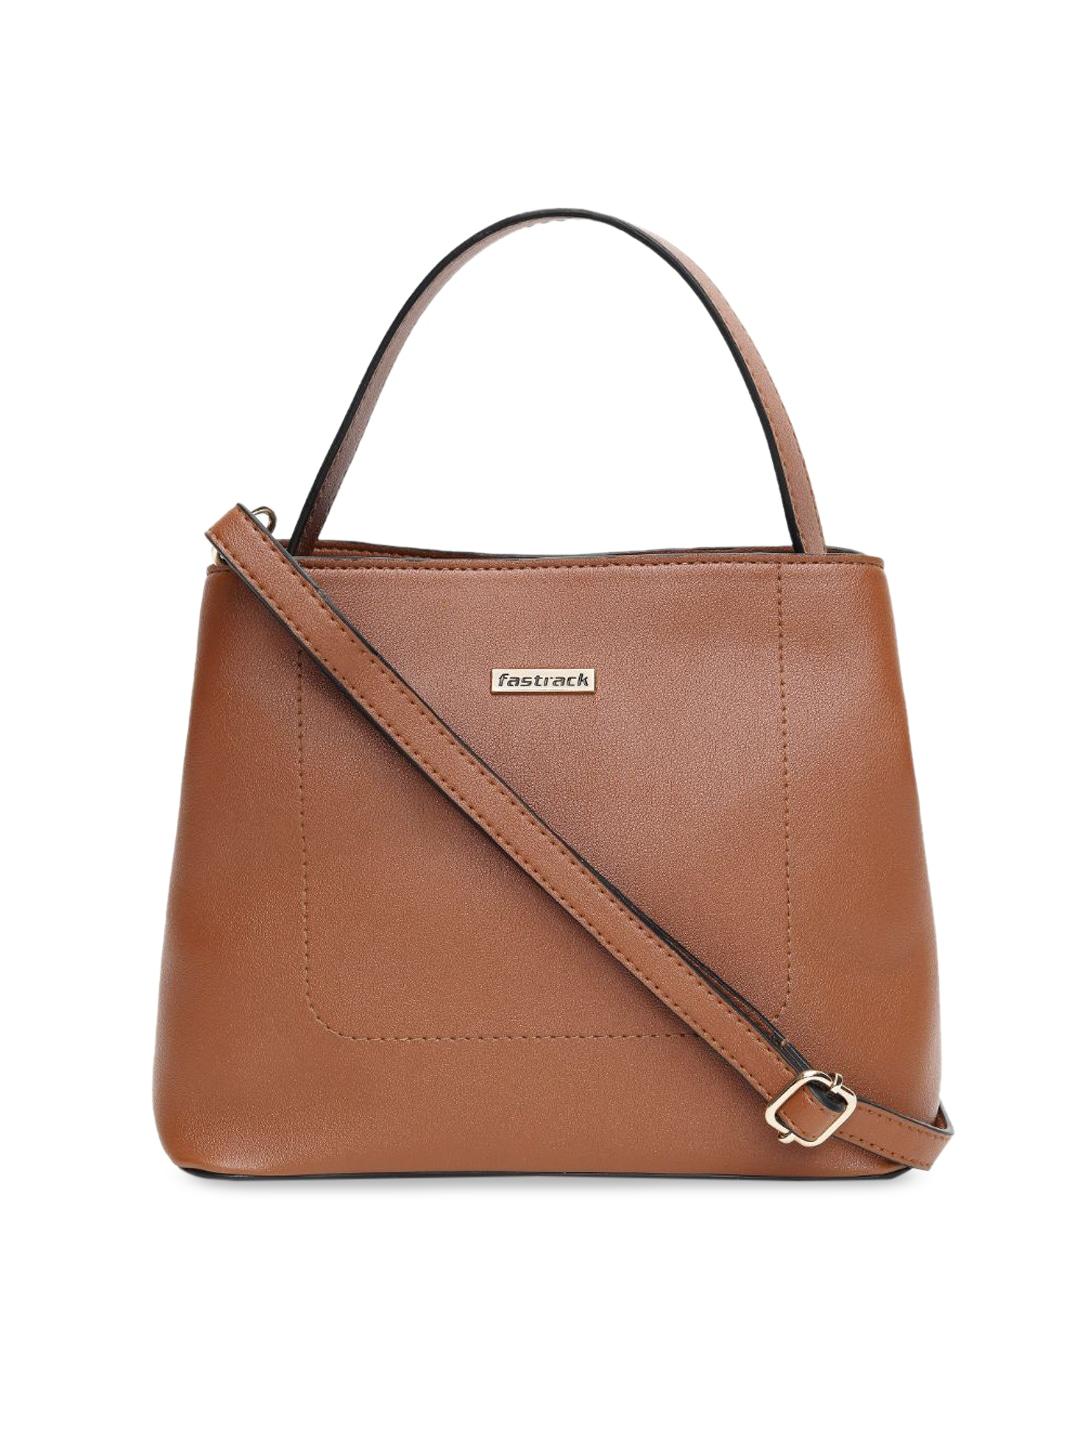 fastrack tan brown structured handheld bag